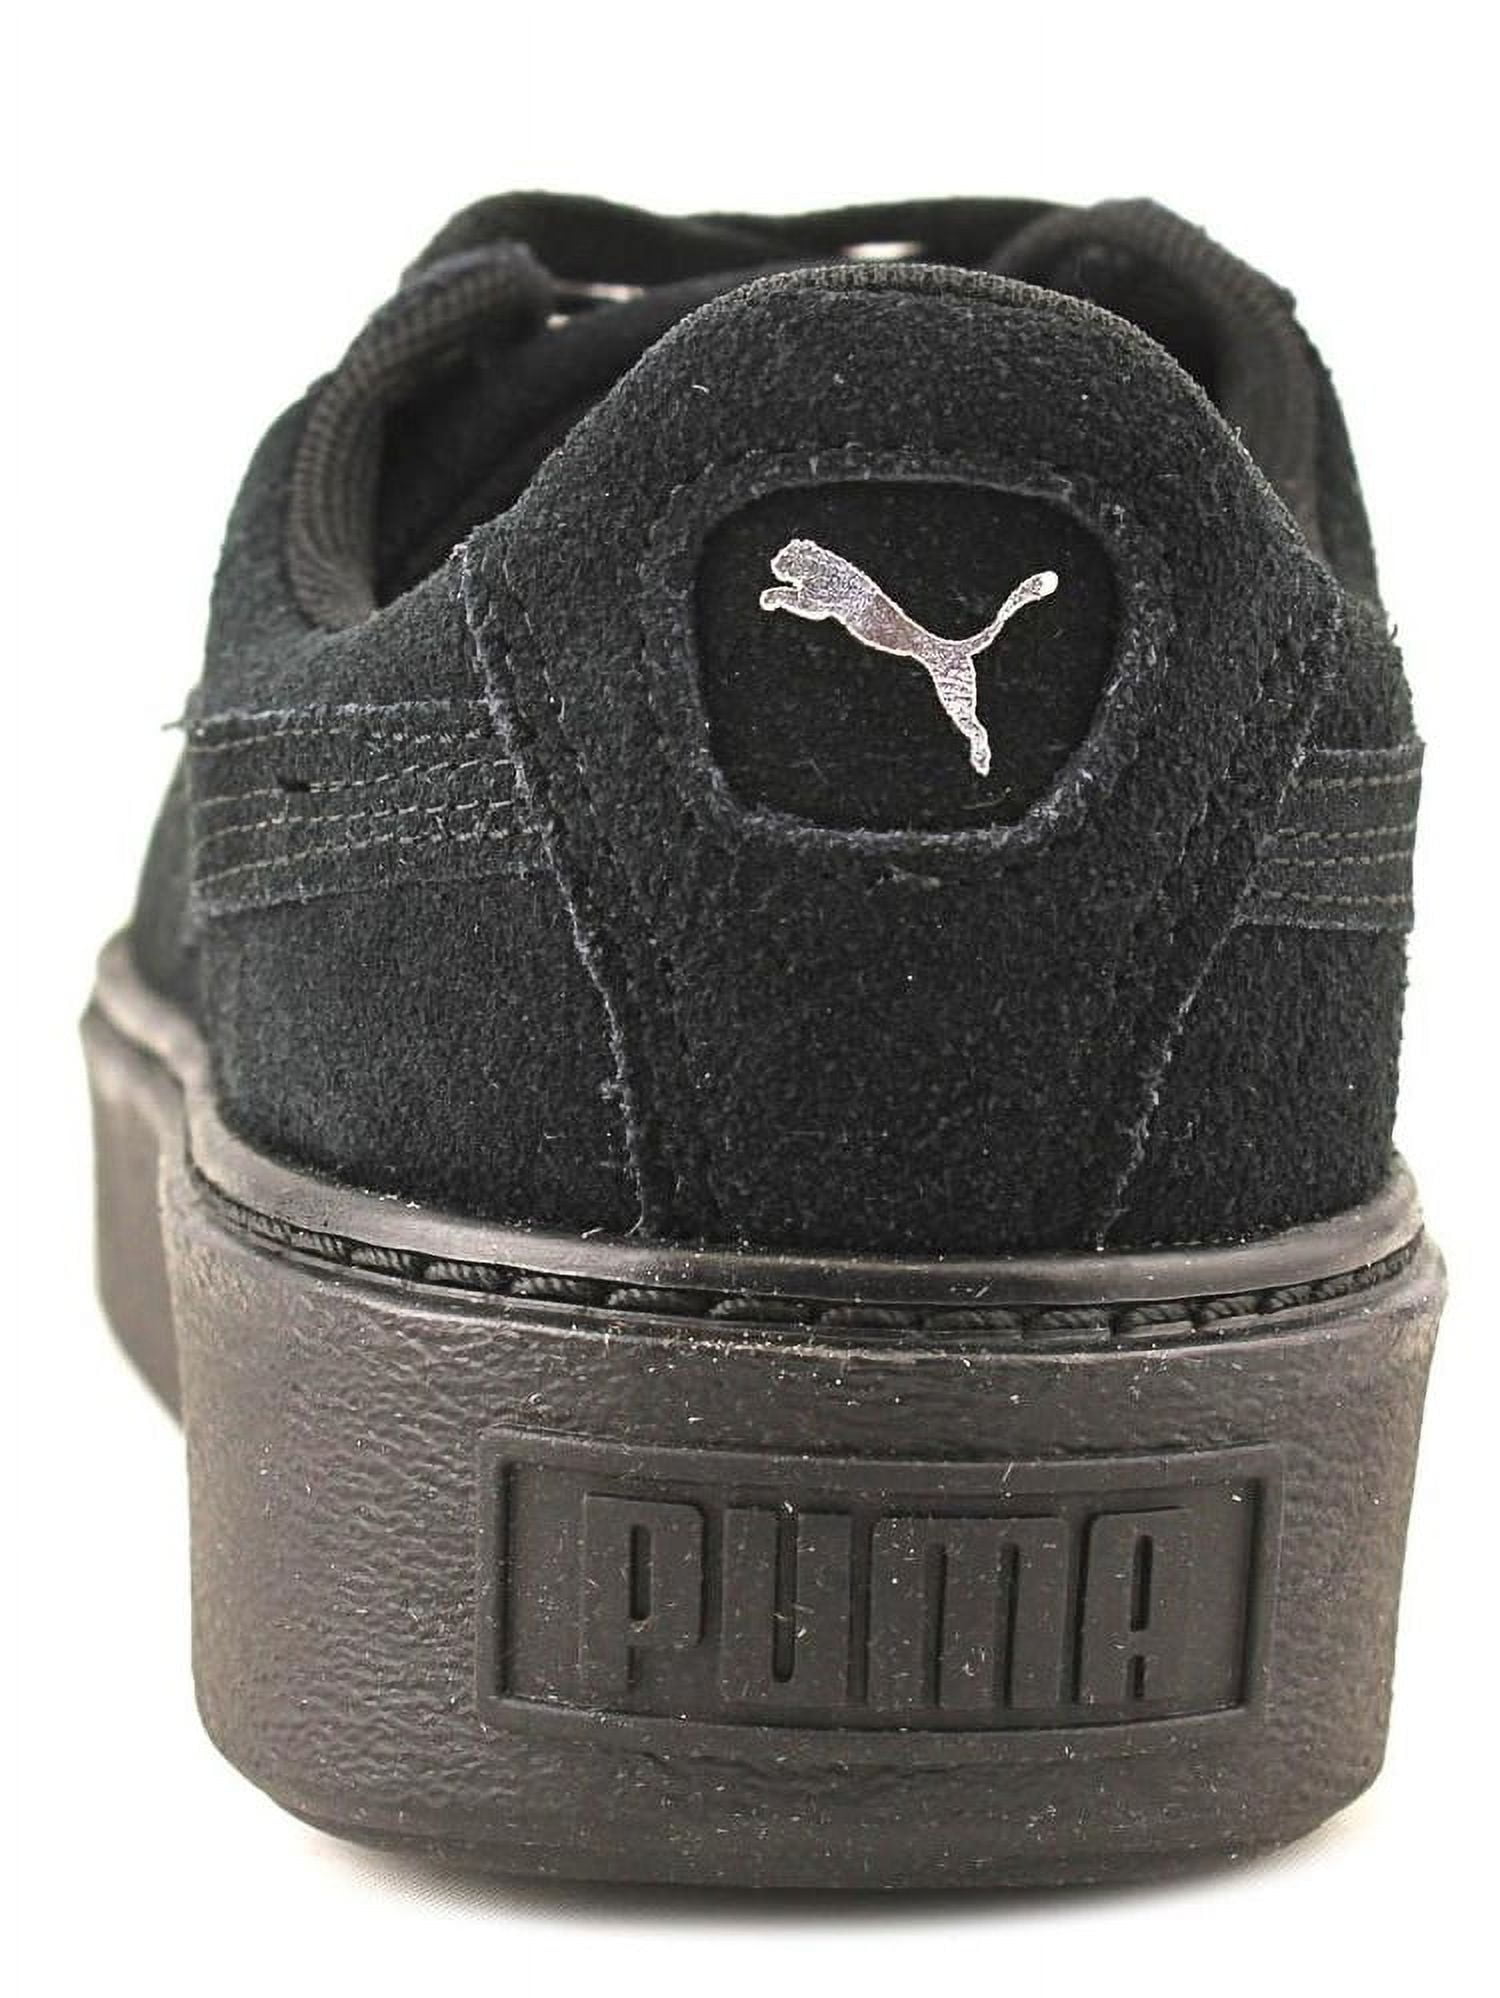 Puma x Swarovski suede sneakers for Women - Black in UAE | Level Shoes